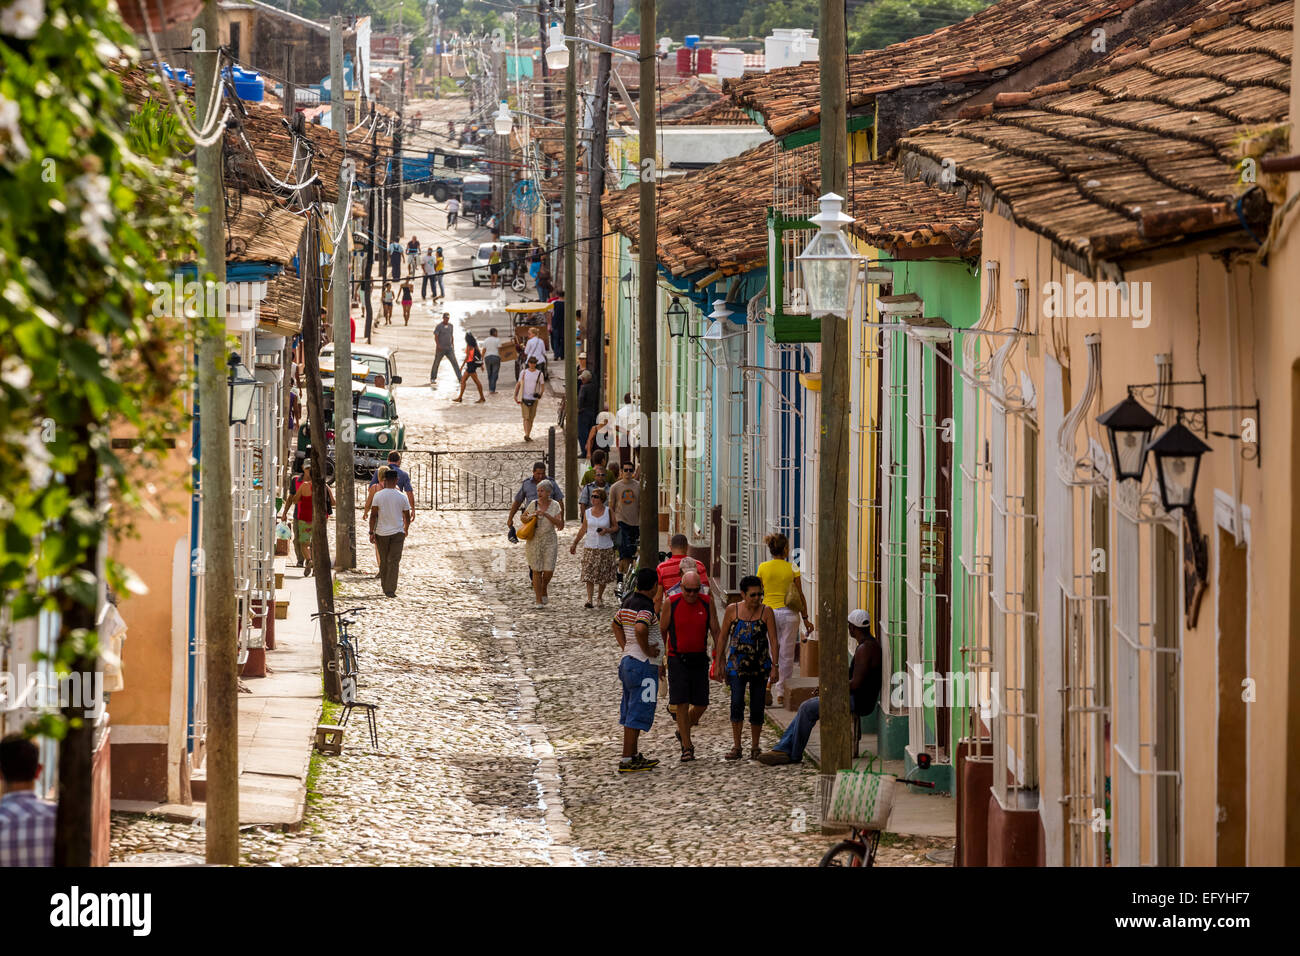 Street scene, old town, Trinidad, Sancti Spiritus Province, Cuba Stock Photo